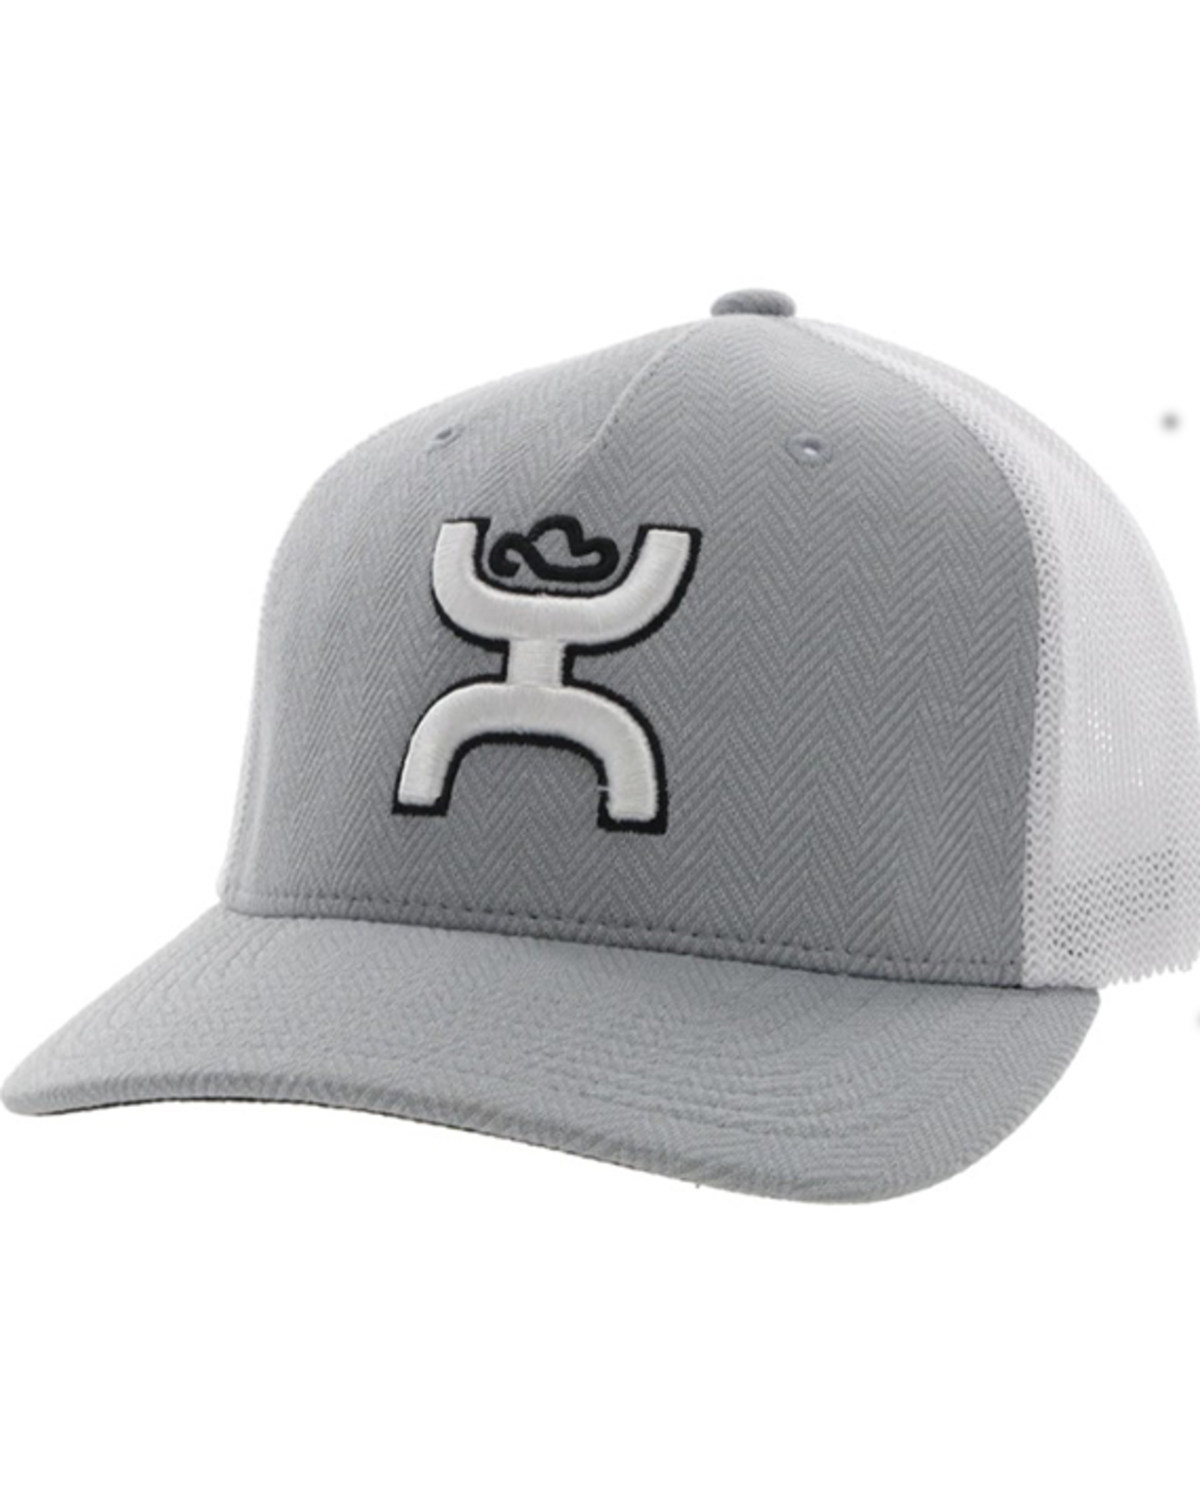 Hooey Men's Coach Logo Embroidered Trucker Cap